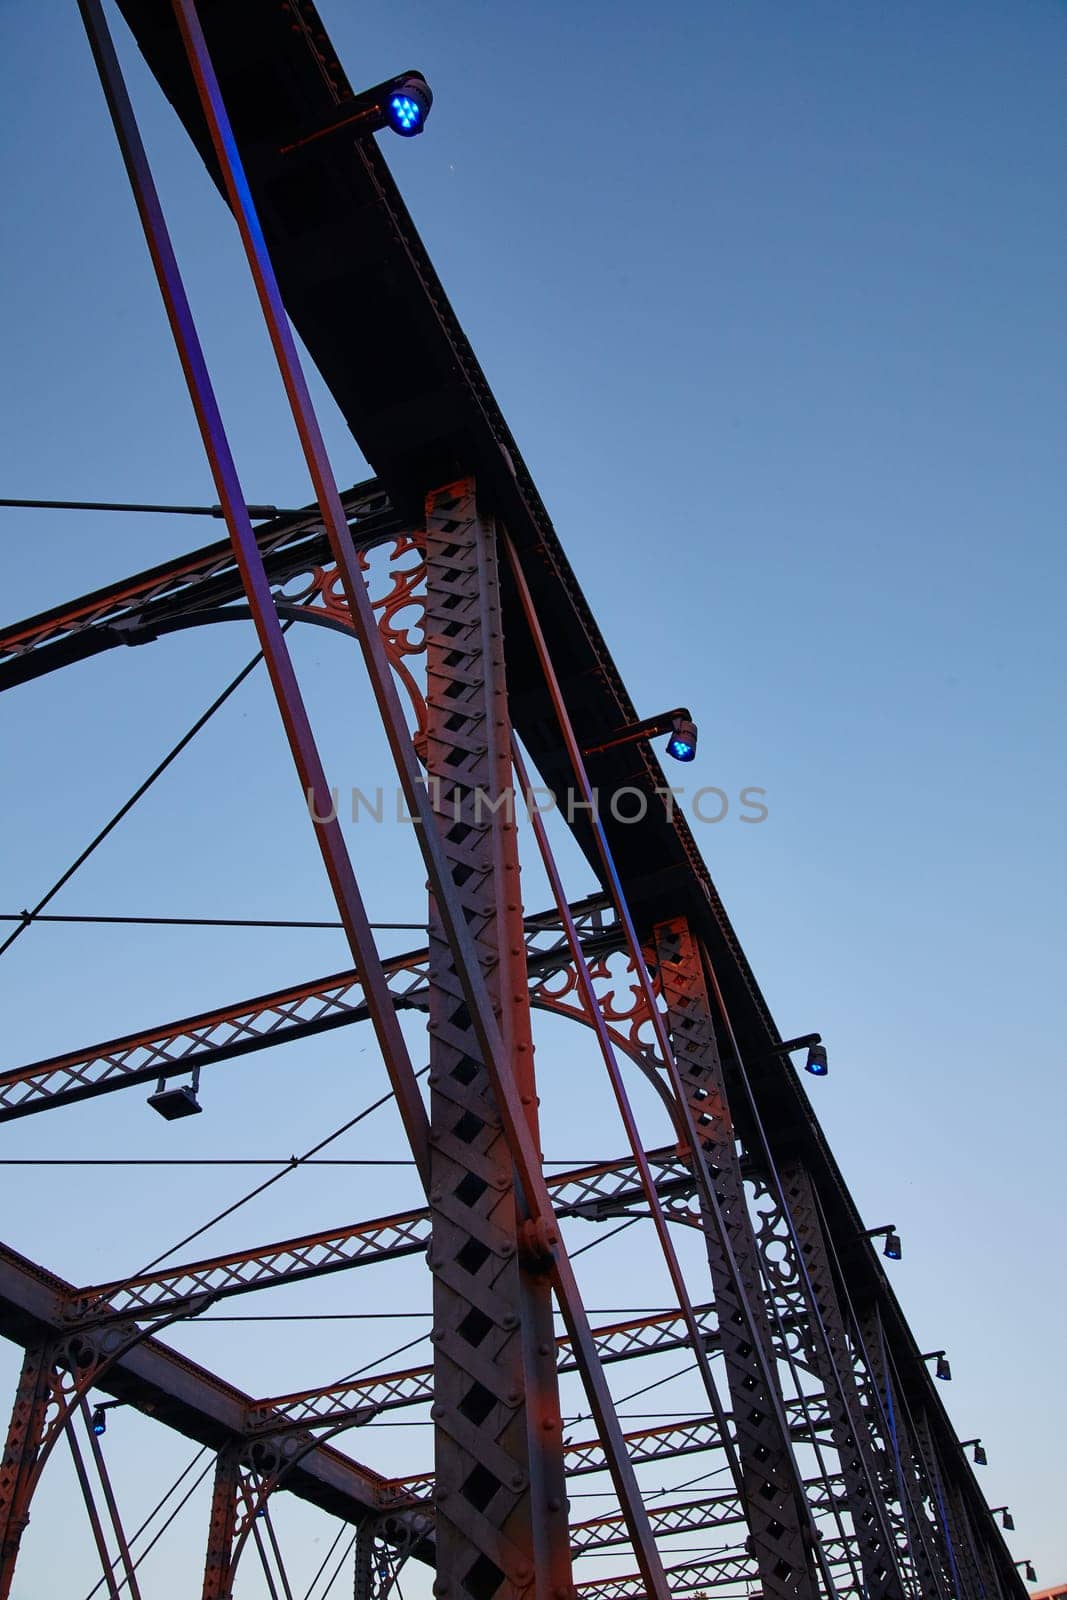 Twilight Steel Bridge Geometry in Fort Wayne, Indiana by njproductions